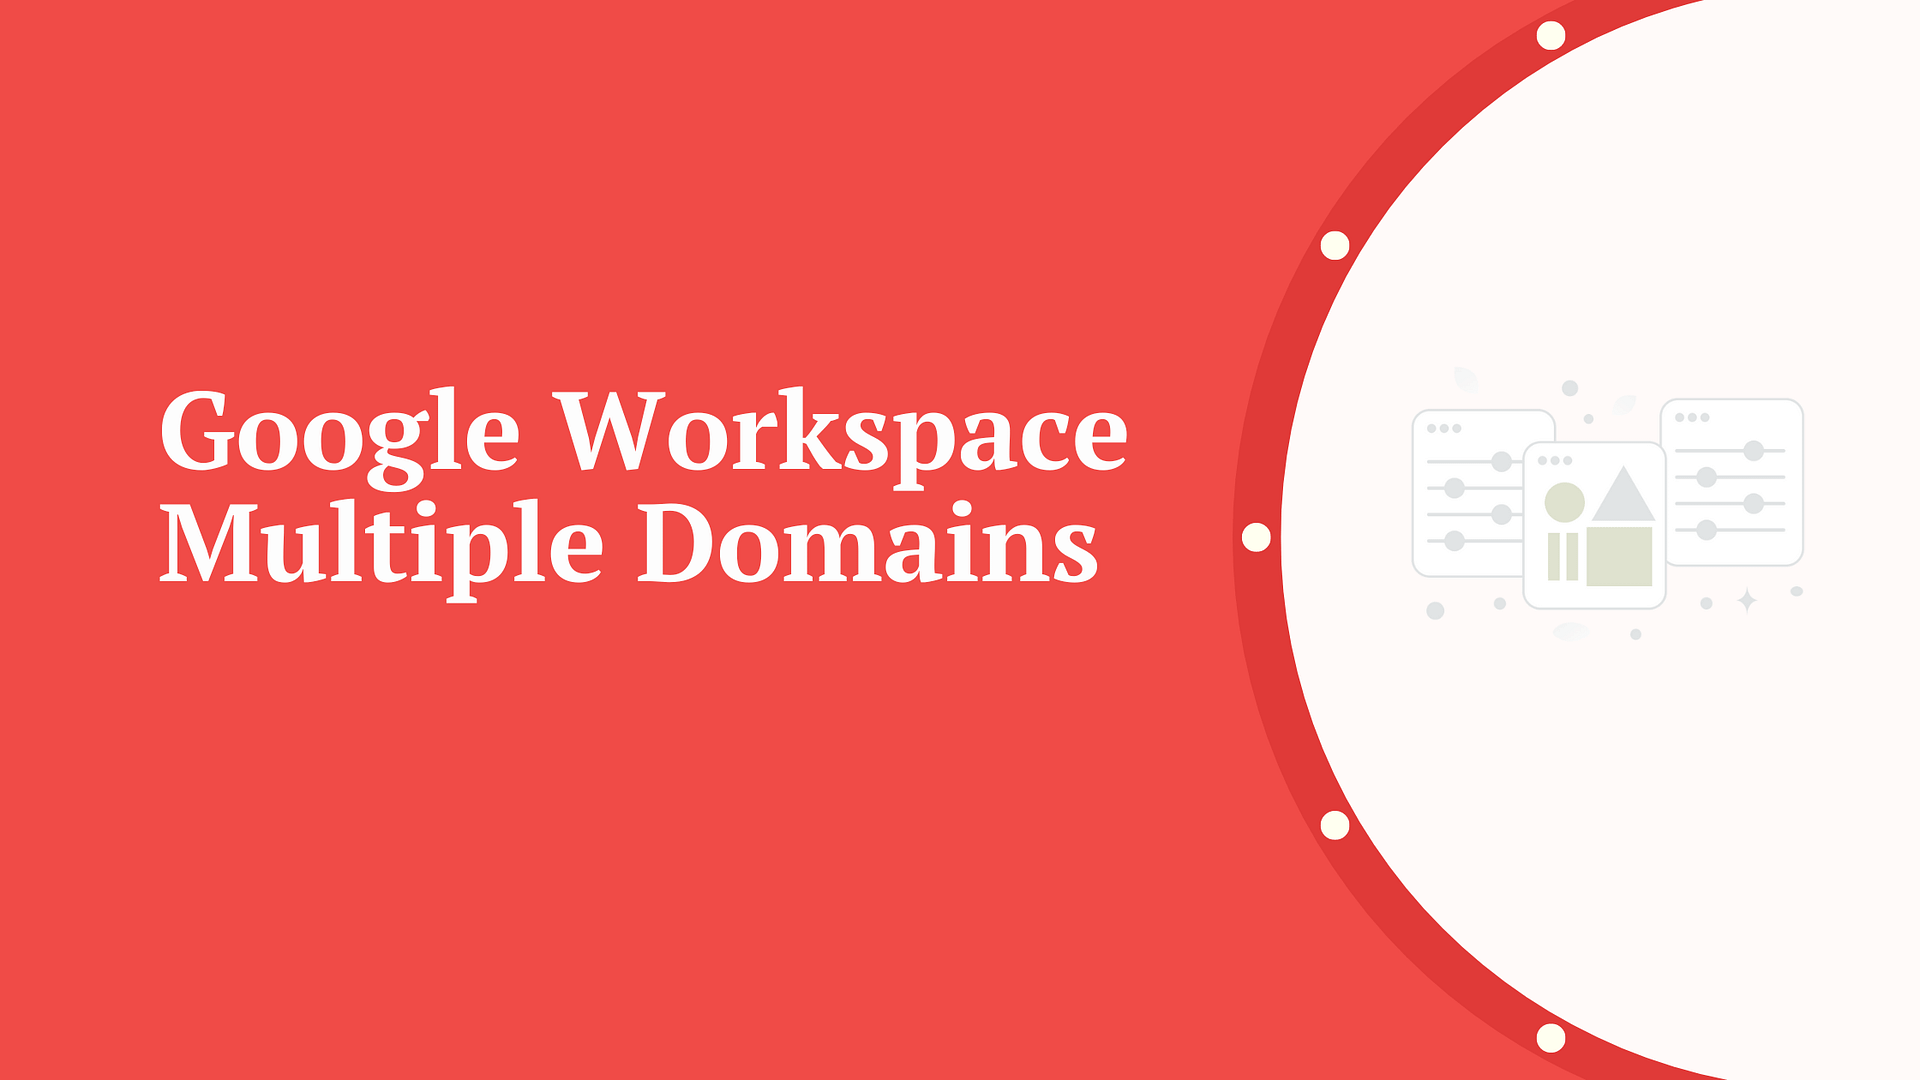 Google workspace multiple domains.